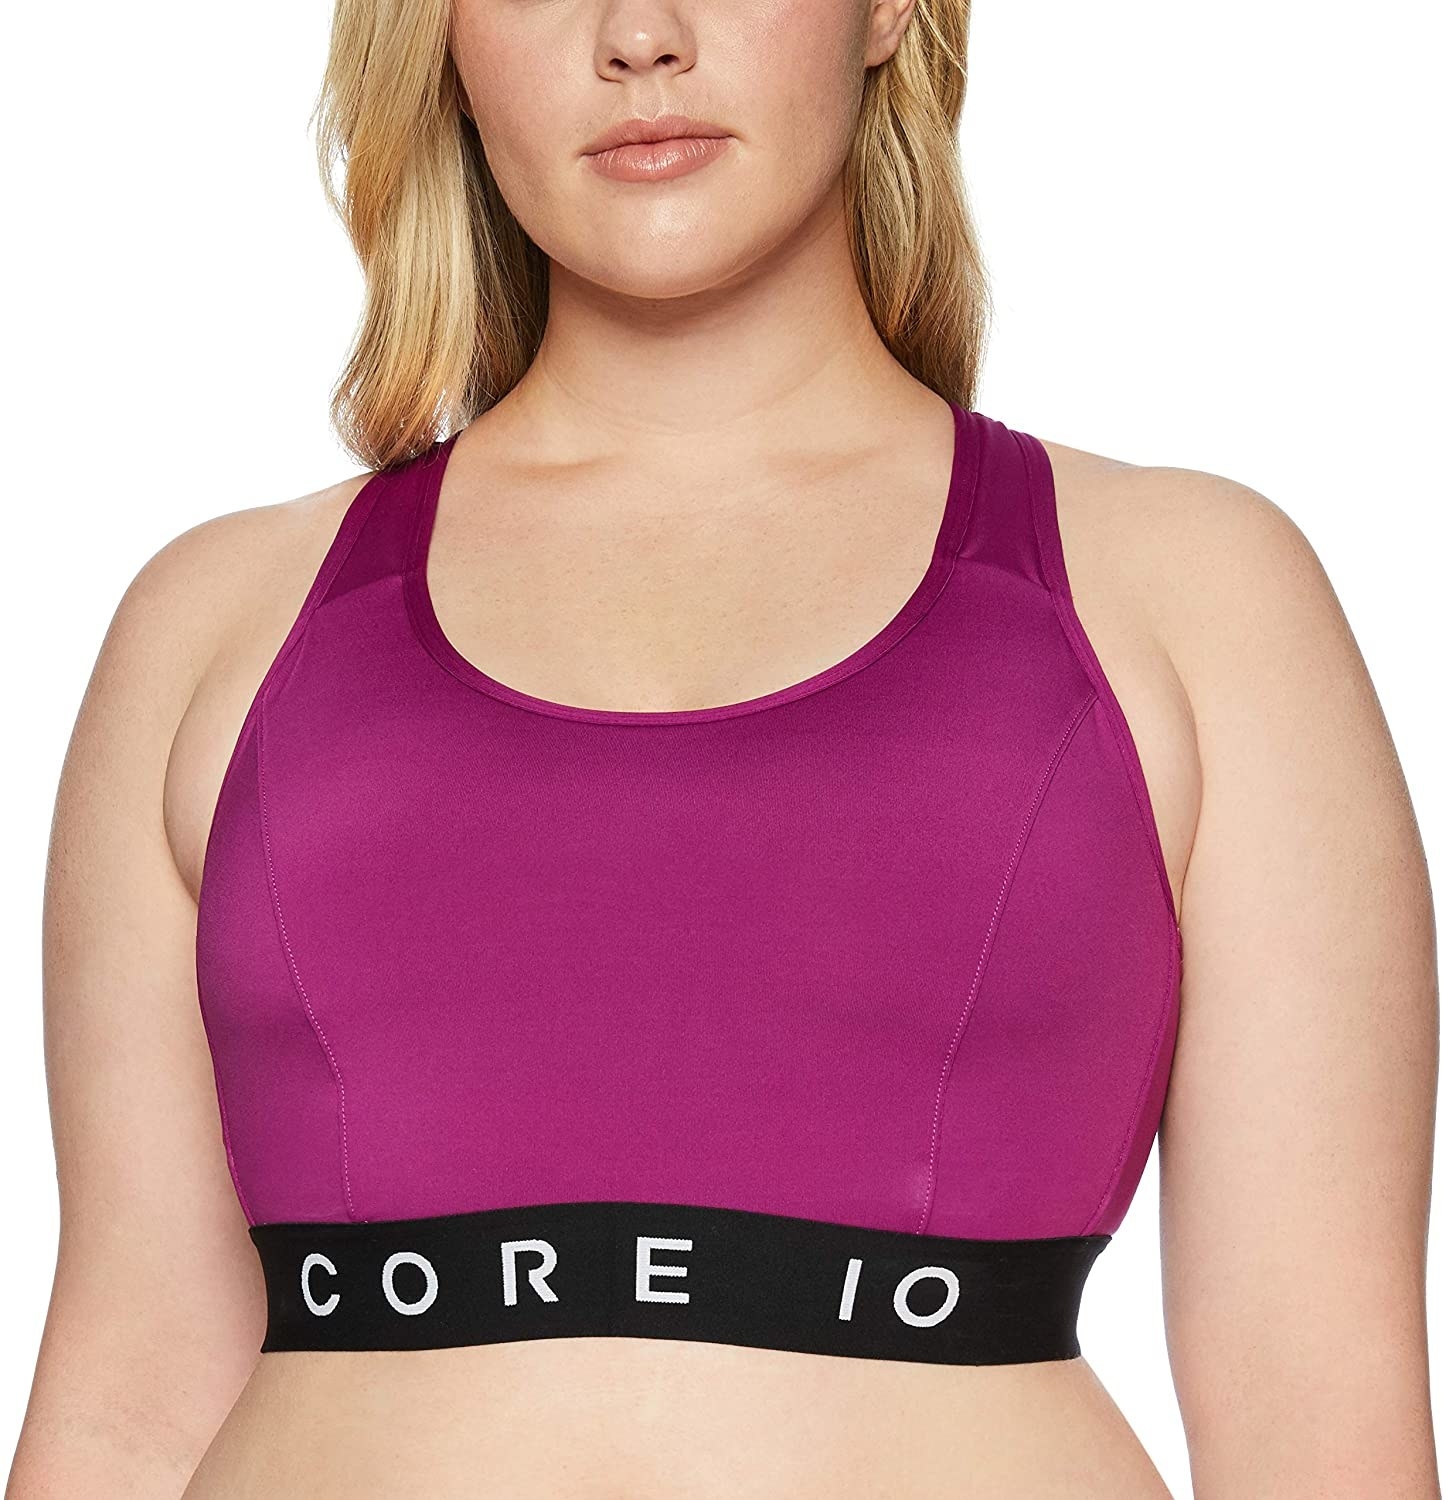 Model wearing the violet sports bra